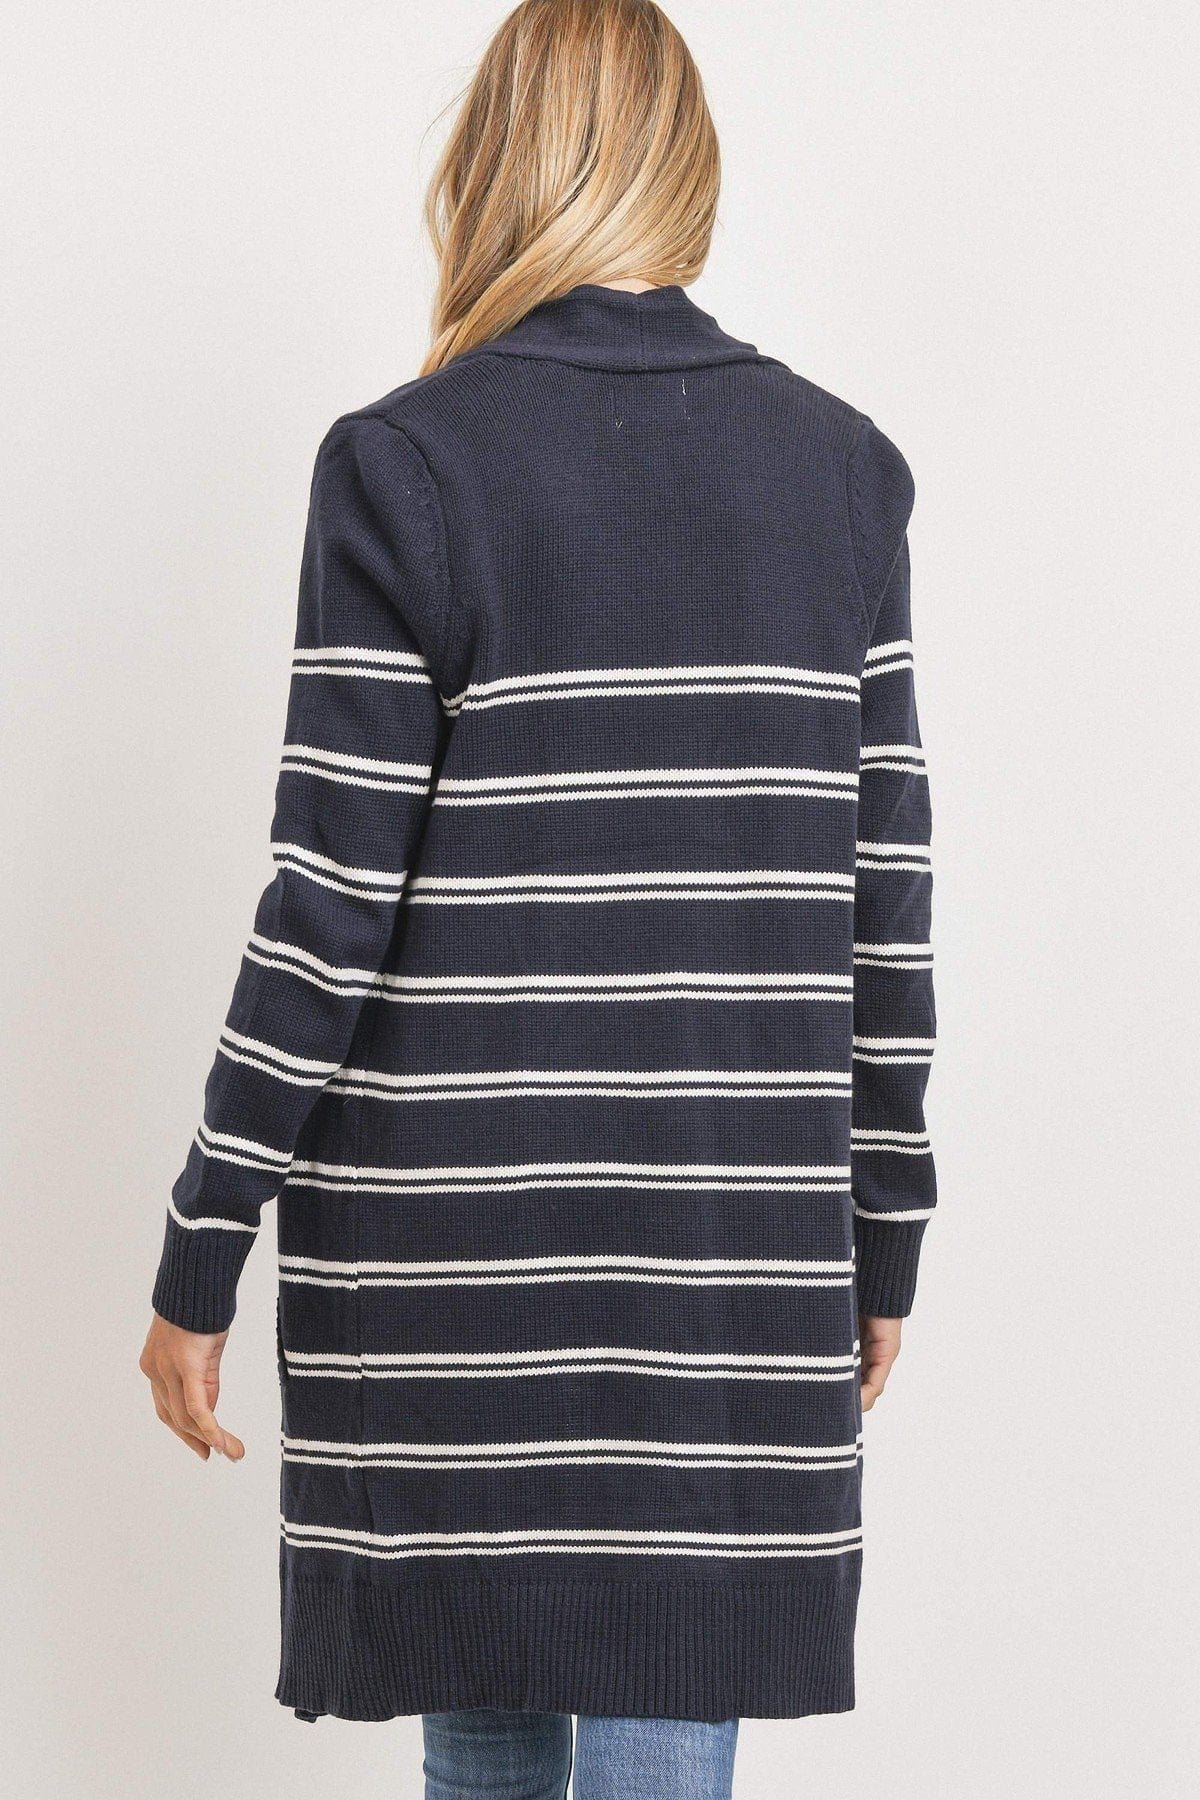 Striped Print Open Front Cardigan - Fashion Quality Boutik